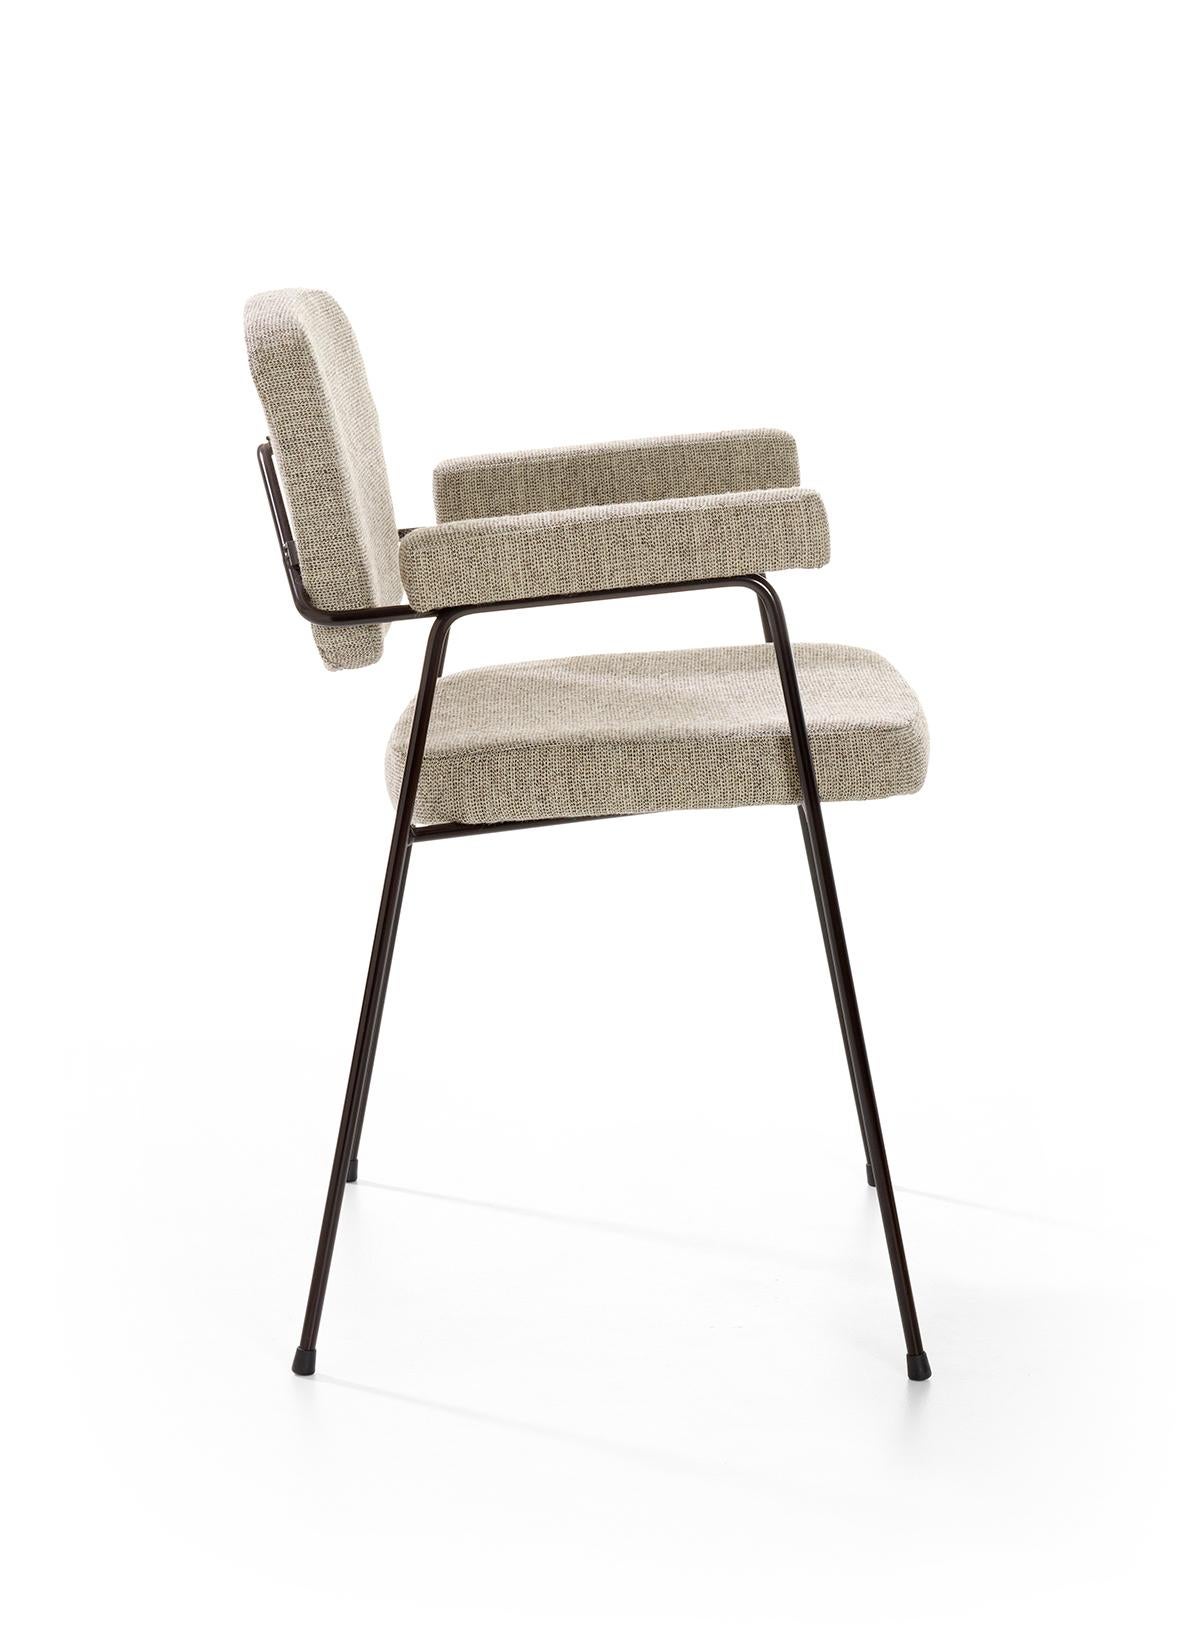 Modern BALANCE 50% Artifort Moulin Chair Designed by Pierre Paulin